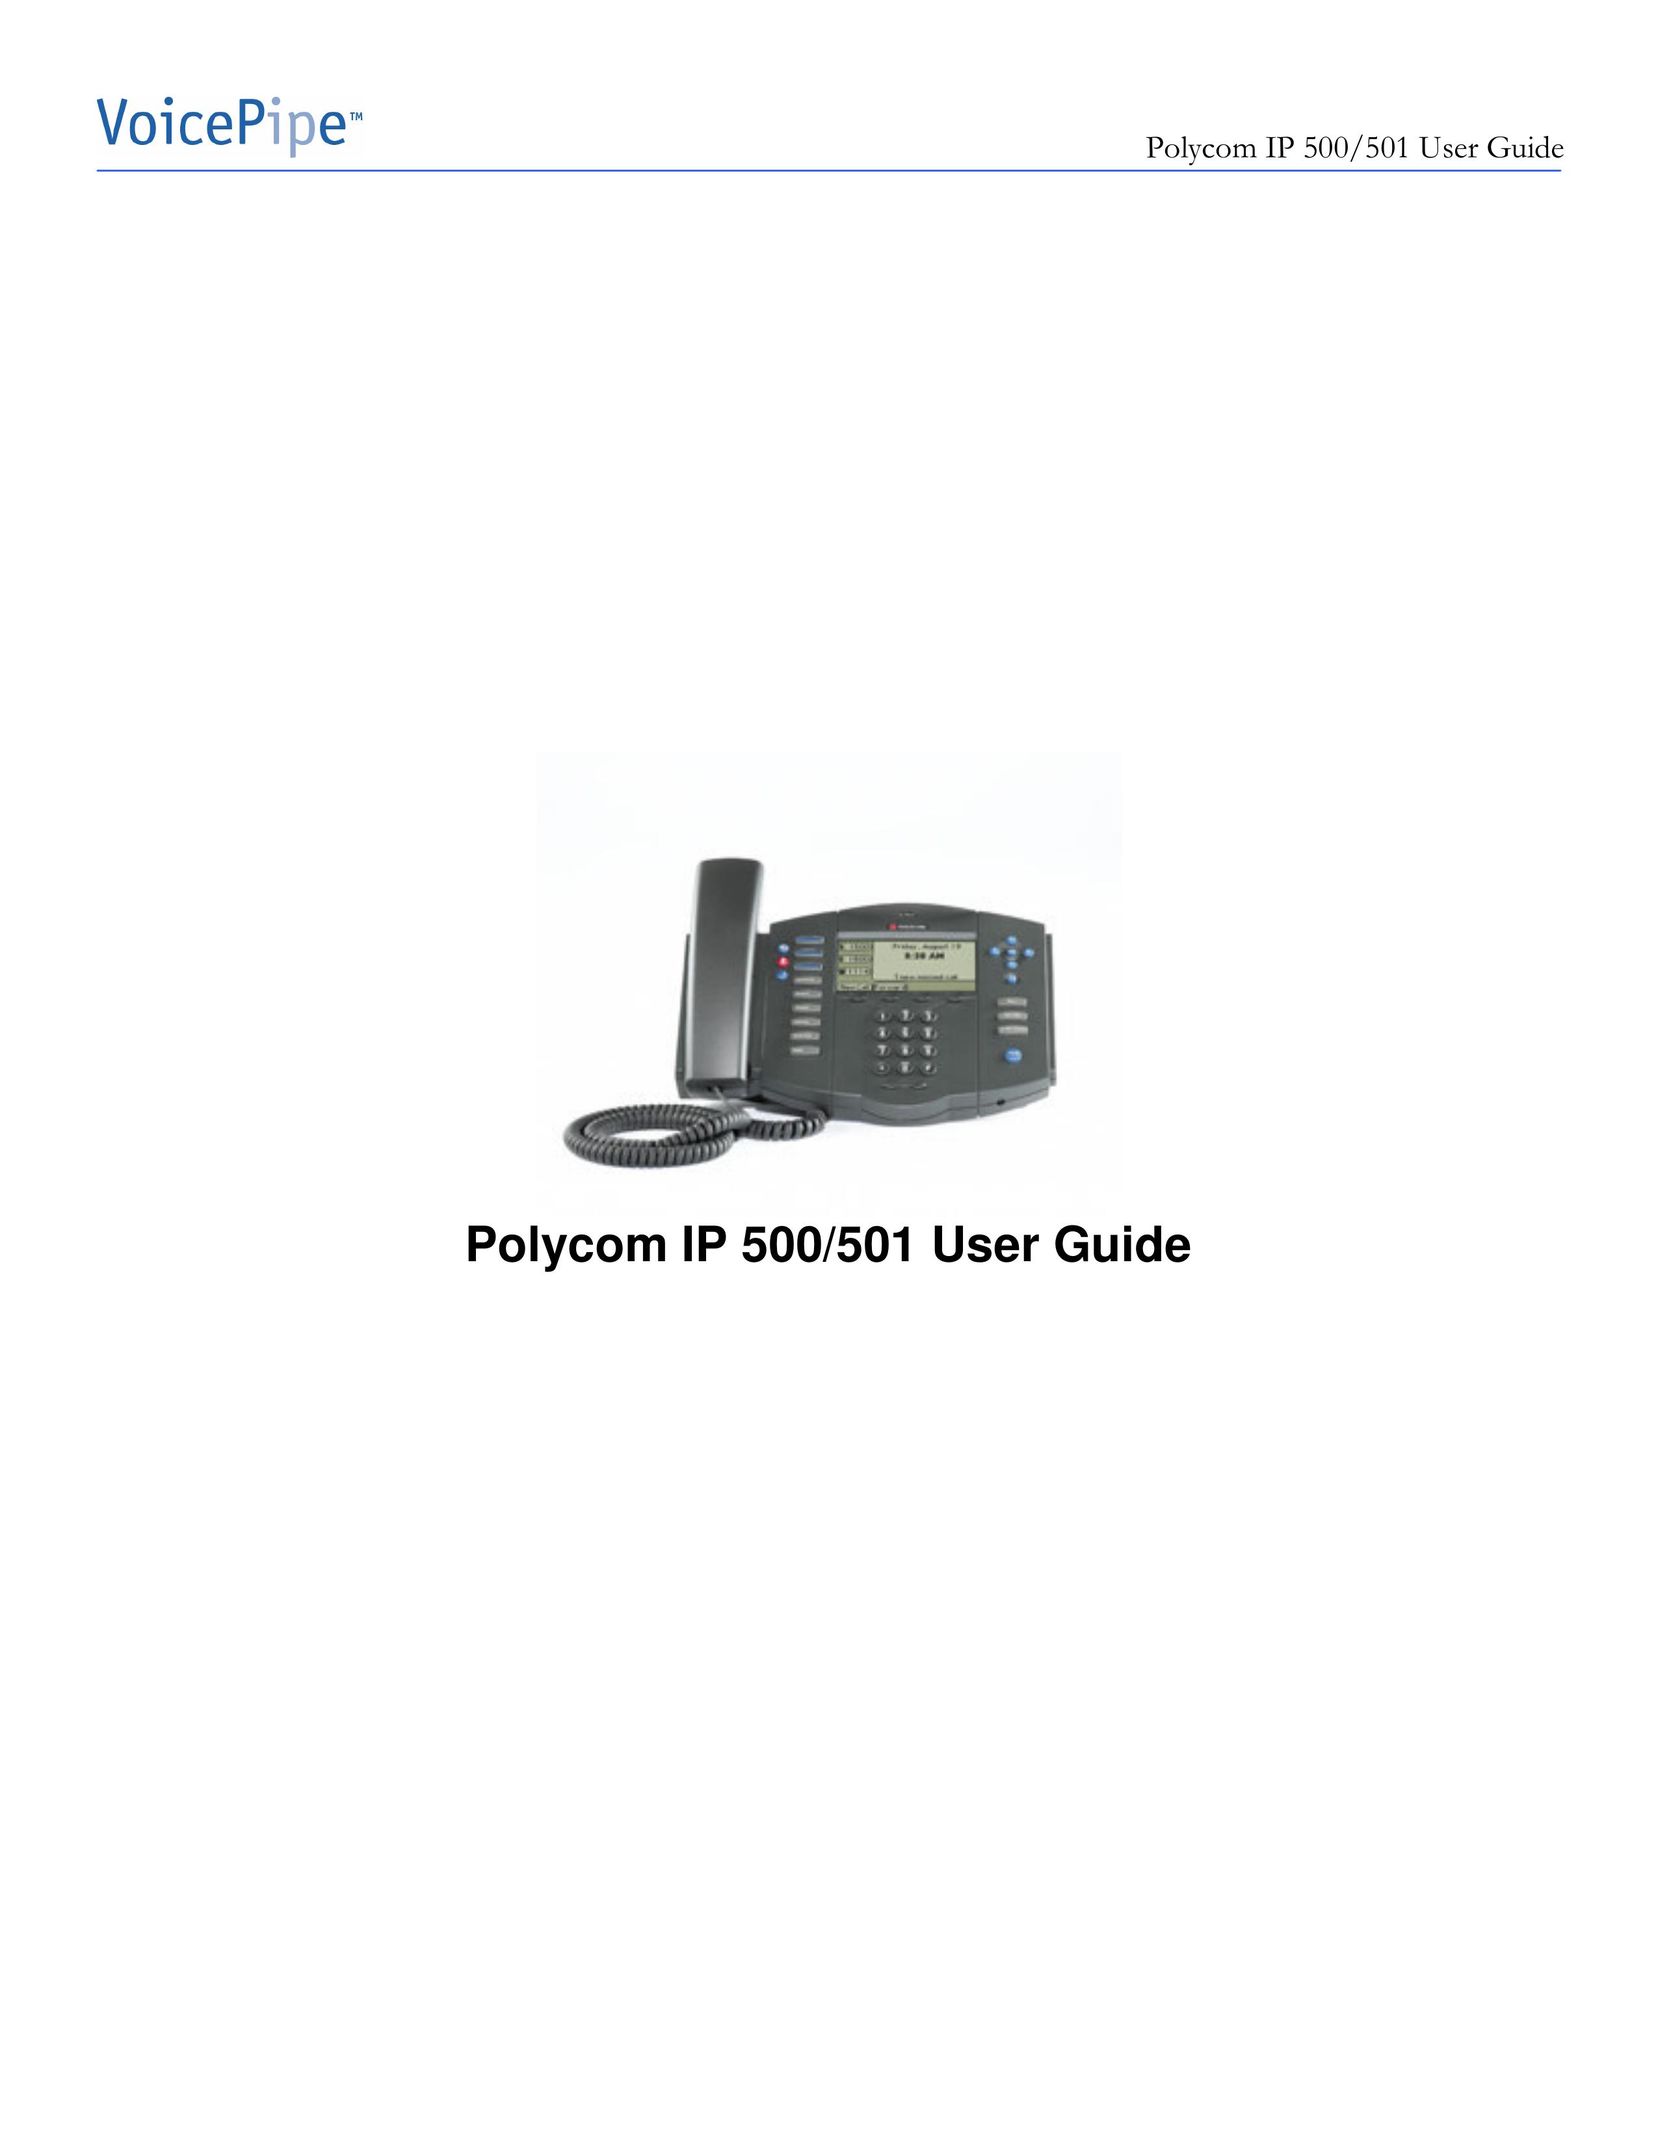 Polycom IP 500 Cordless Telephone User Manual